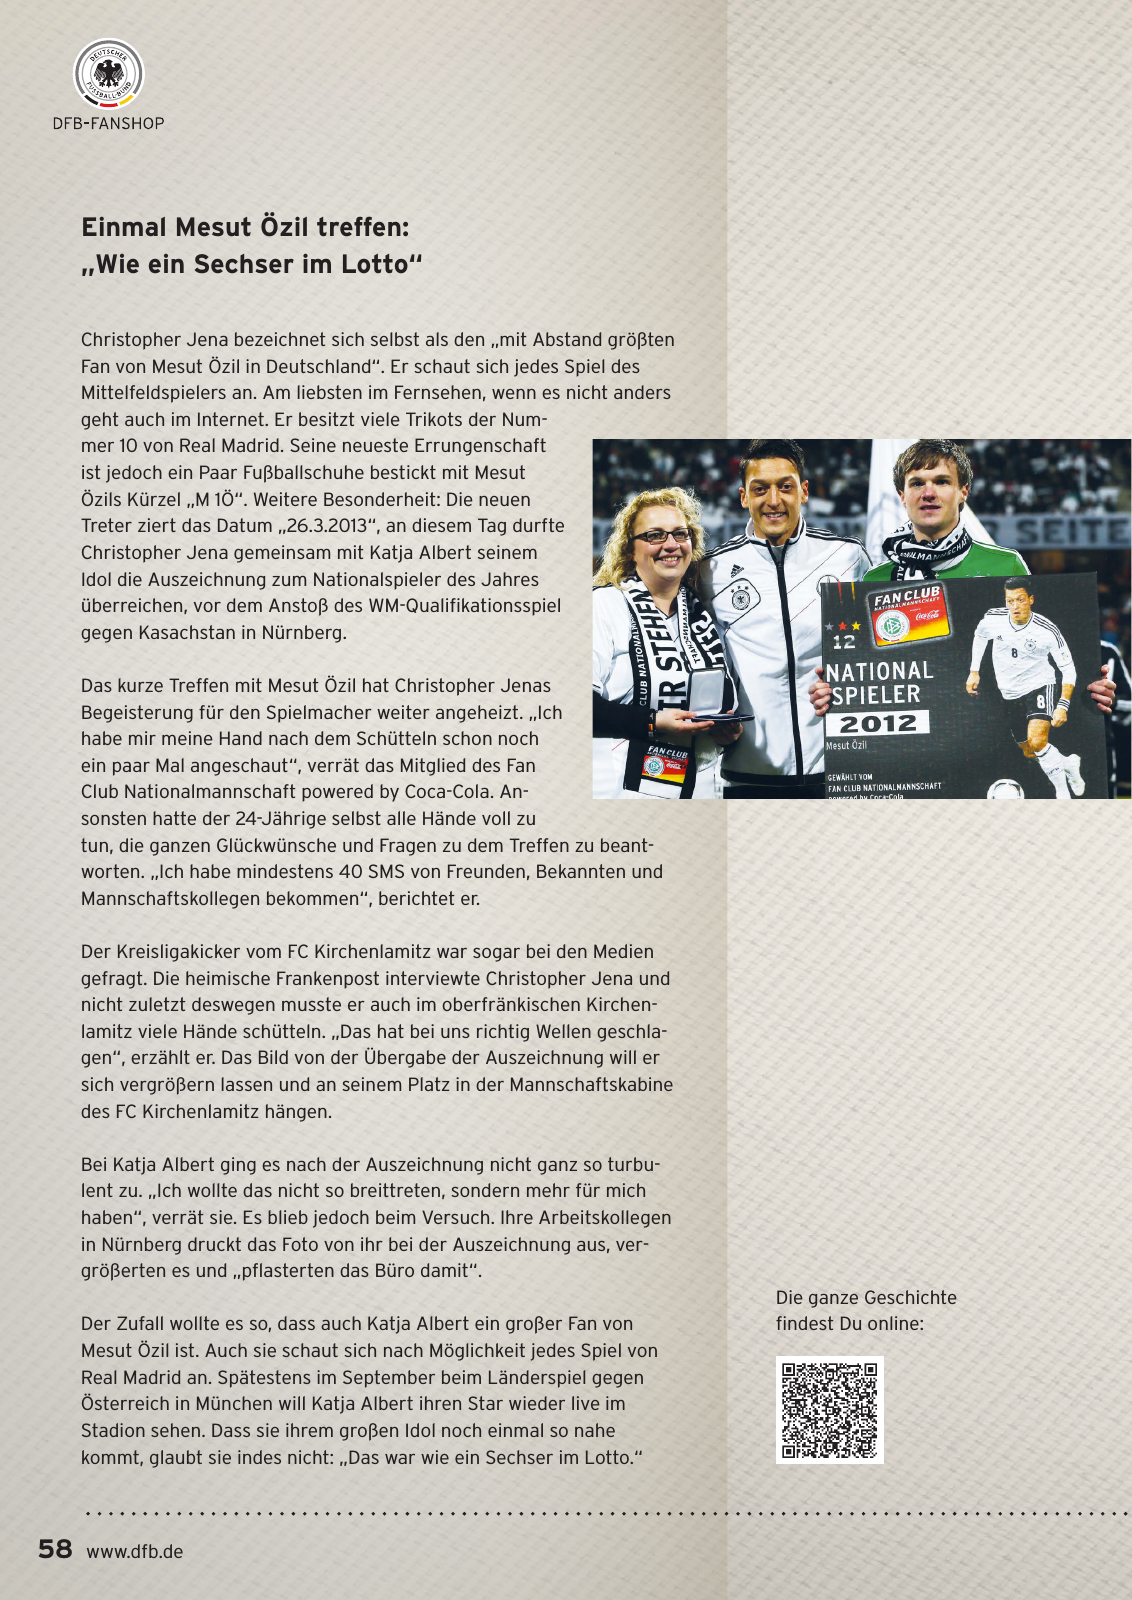 Vorschau DFB // Magalog 2014 Seite 58